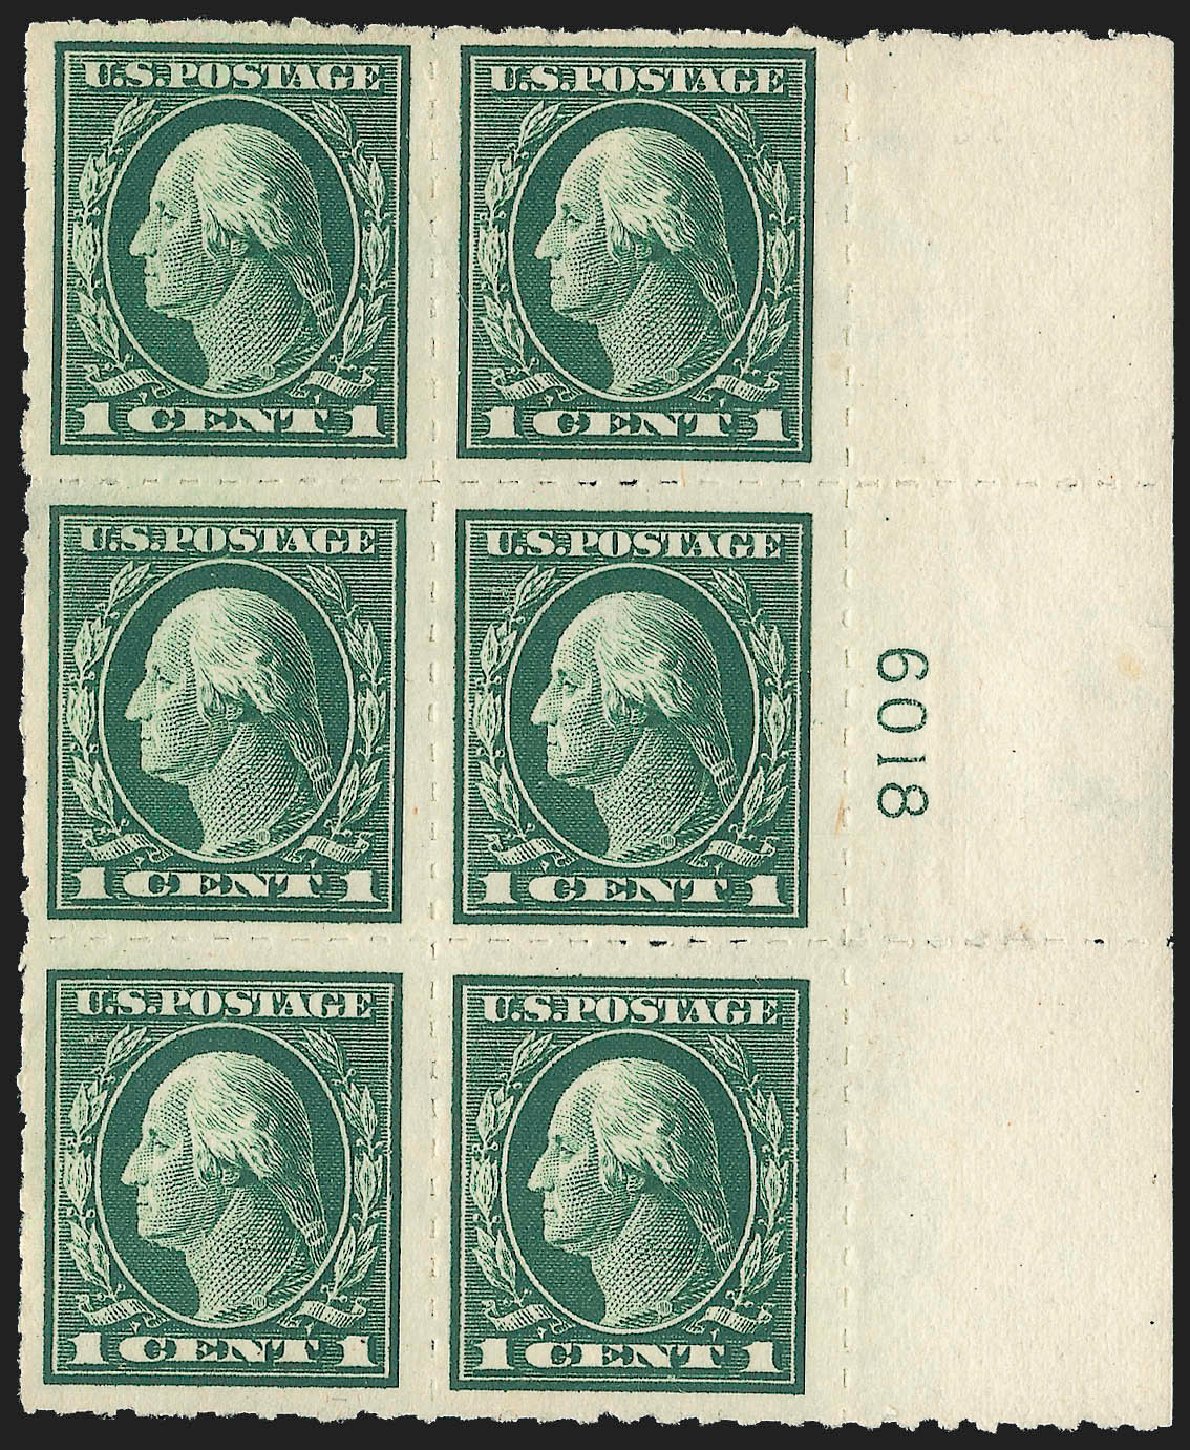 Price of US Stamp Scott Cat. 408 - 1c 1912 Washington Imperf. Robert Siegel Auction Galleries, Jul 2015, Sale 1107, Lot 457